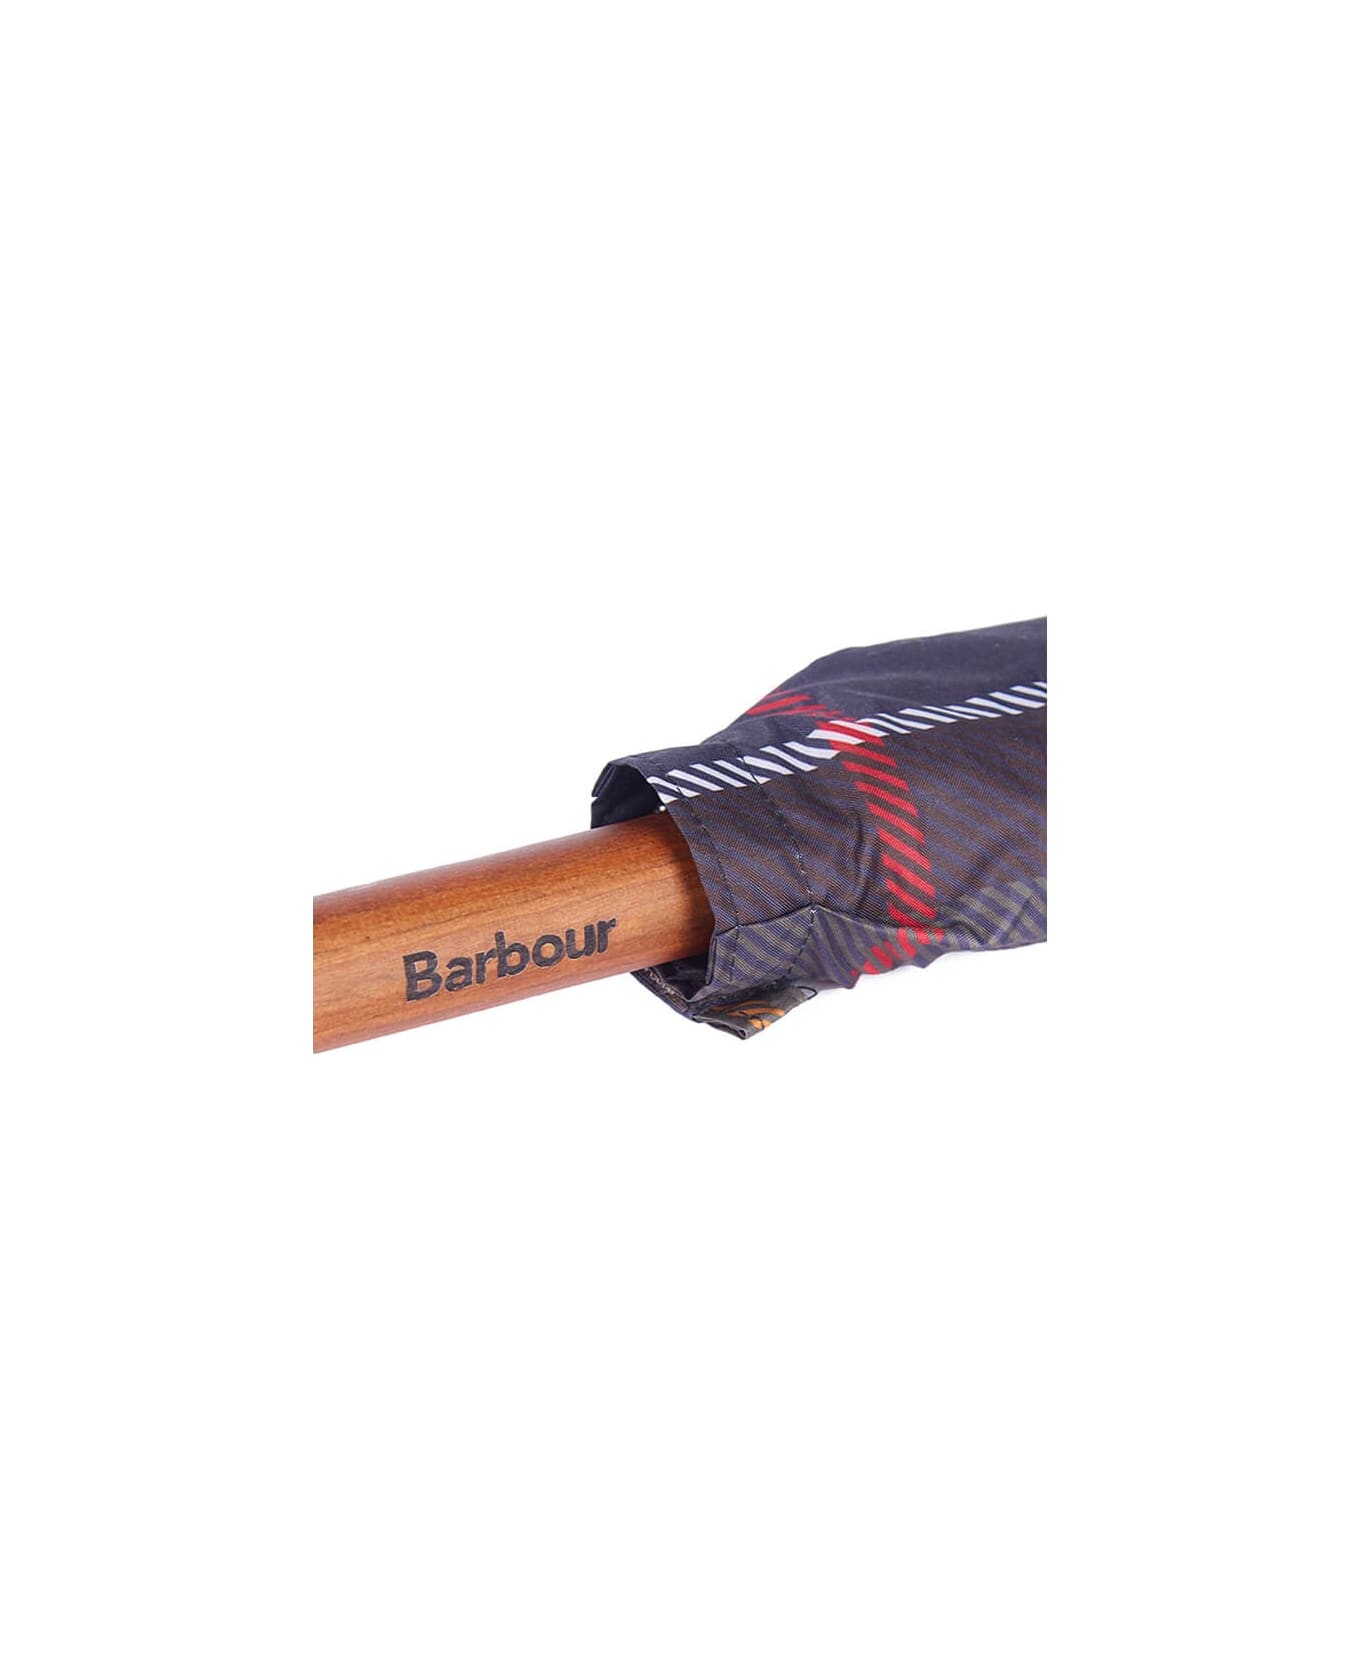 Barbour Tartan Walker Umbrella - Classic